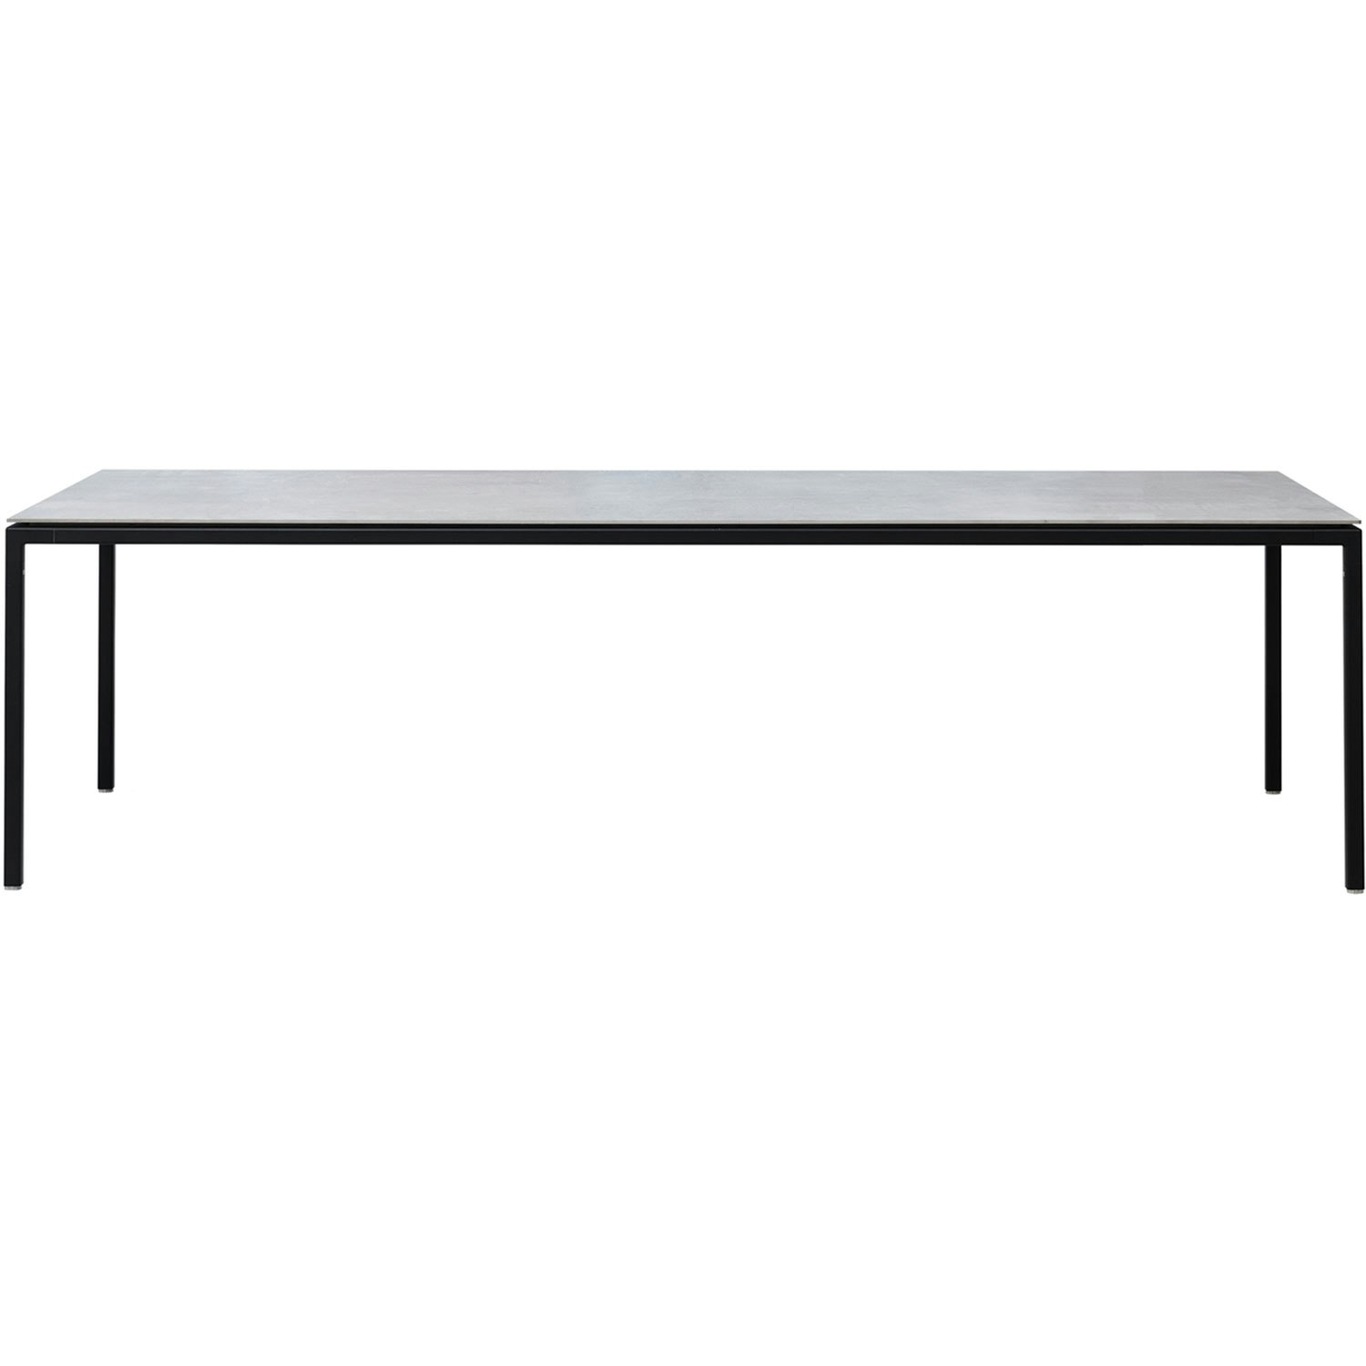 Vipp 972 Dining Table Large 95x240 cm, Light Grey